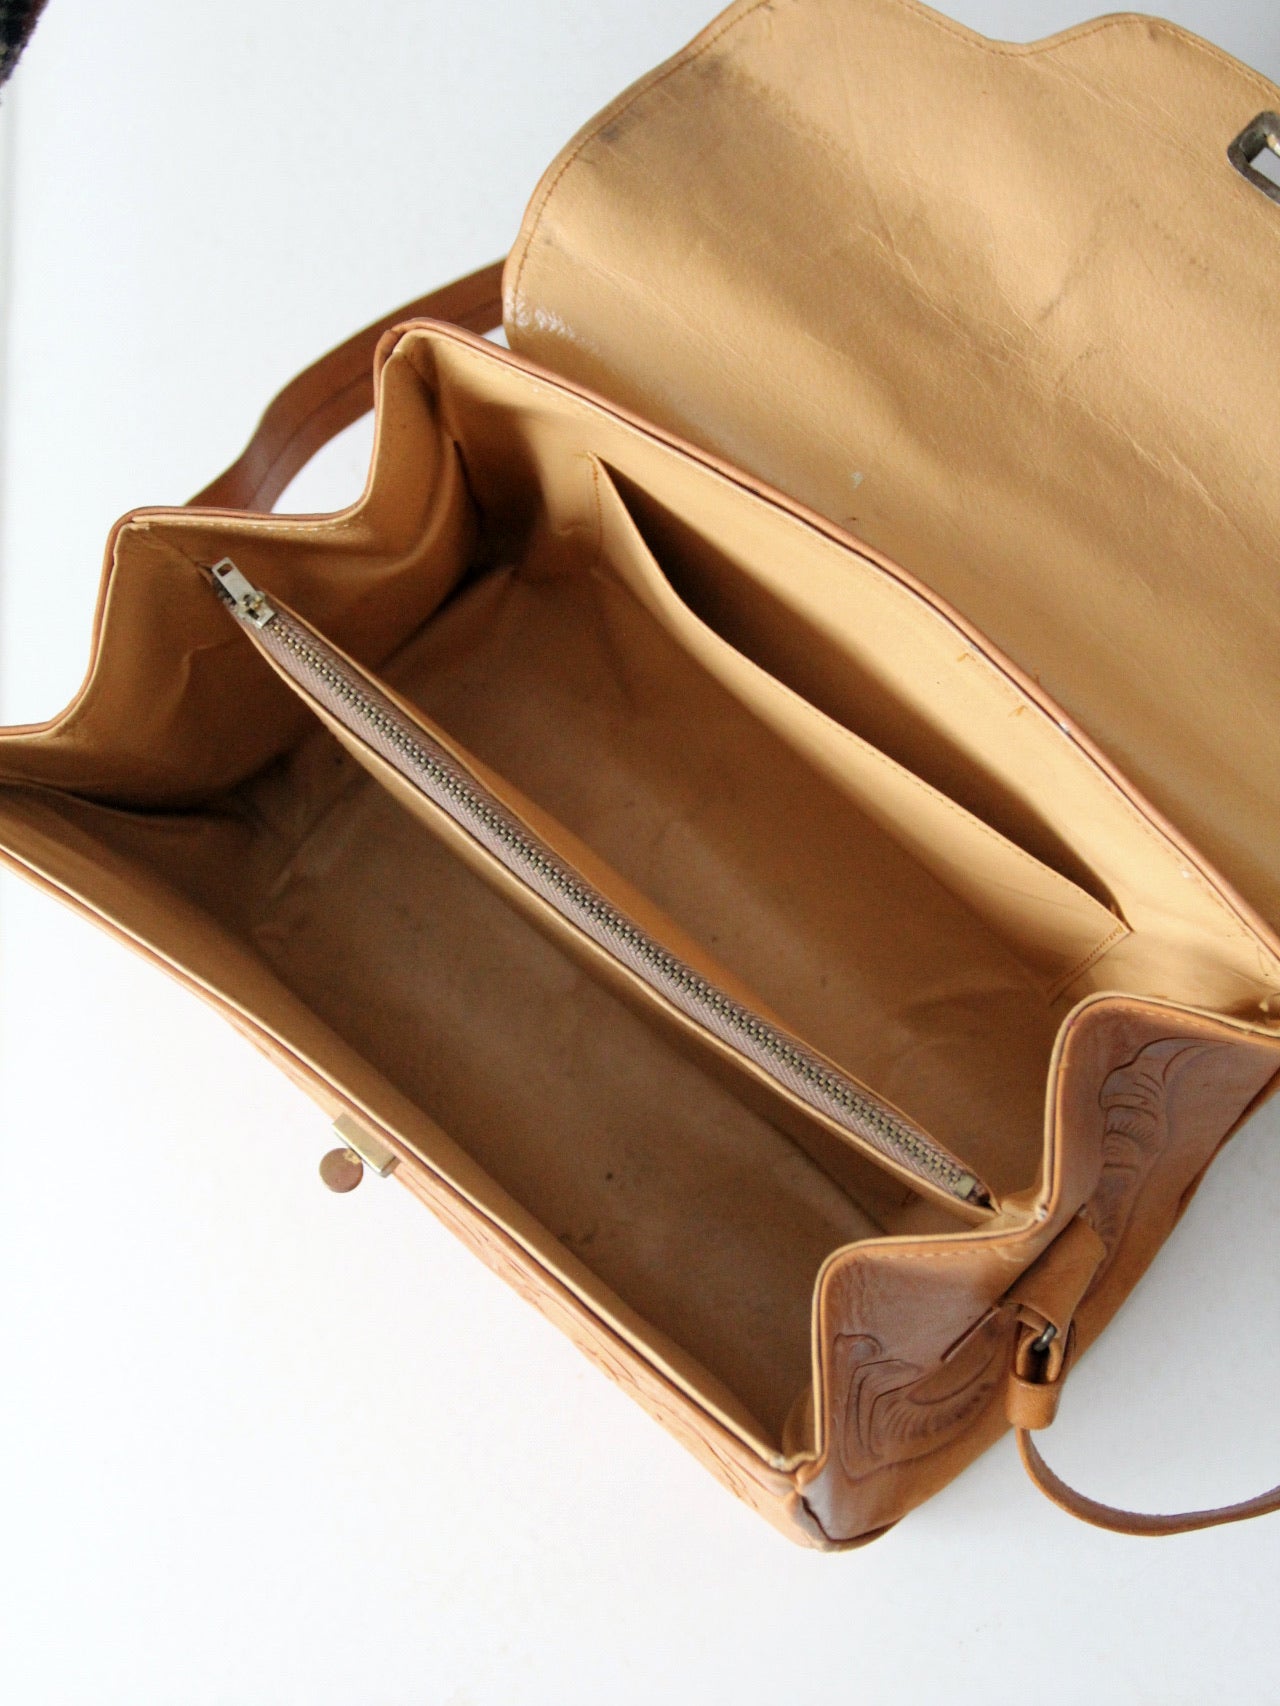 vintage 70s tooled leather bag